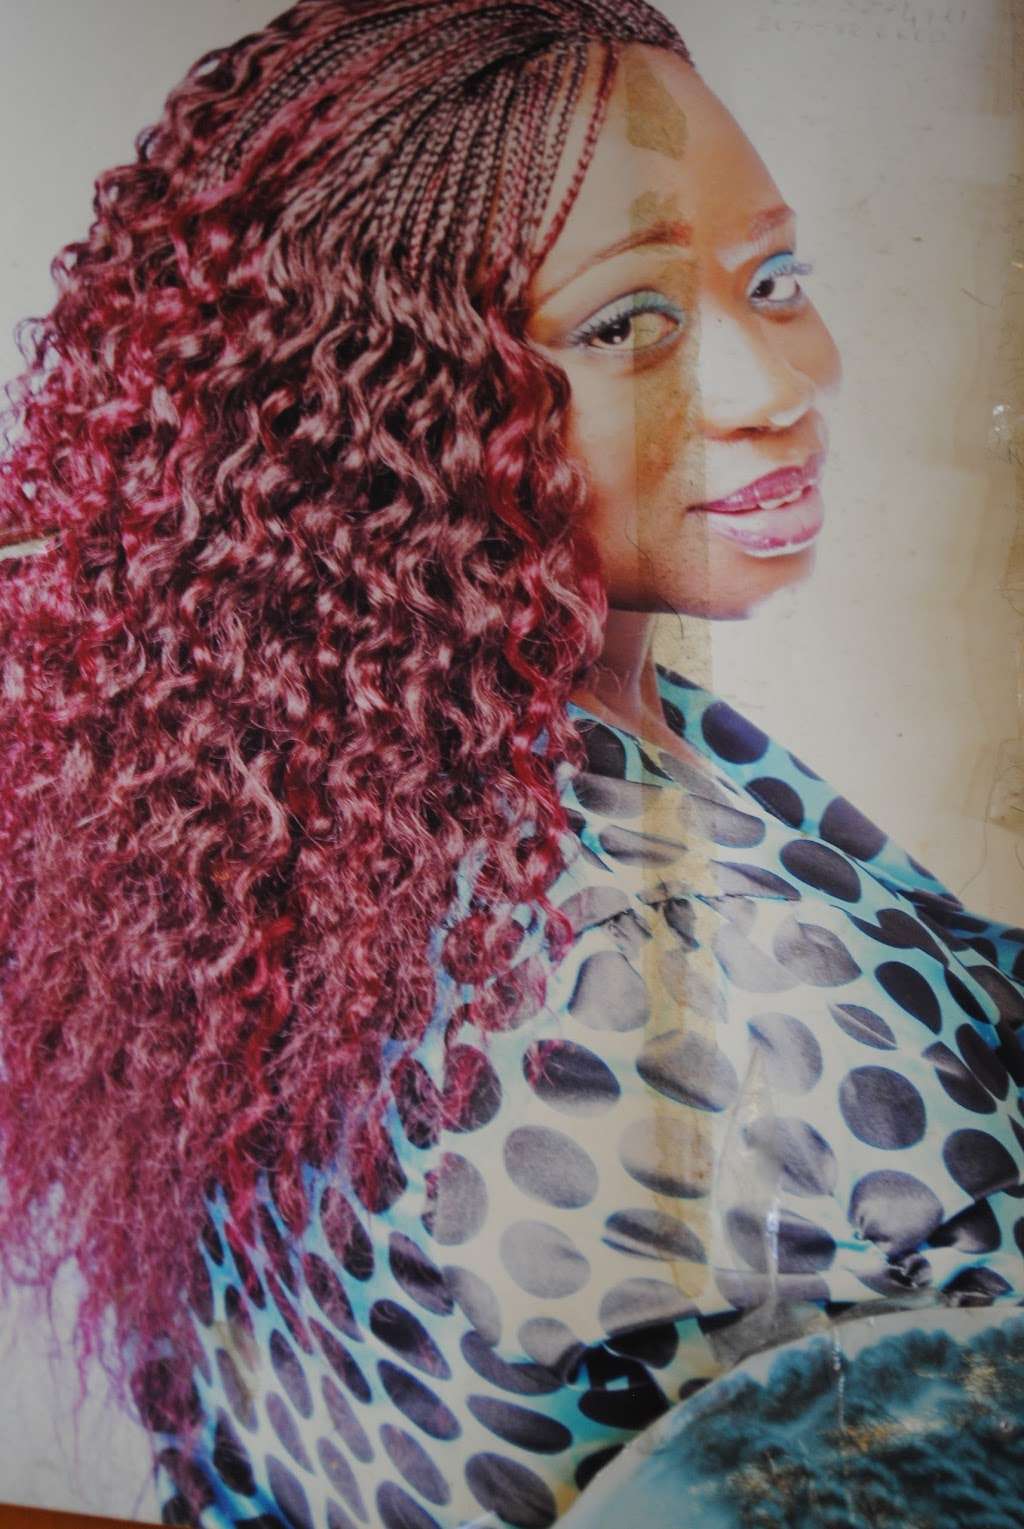 Hawa Professional African Hair Braiding | 5241 Oxford Ave, Philadelphia, PA 19124, USA | Phone: (215) 535-7767